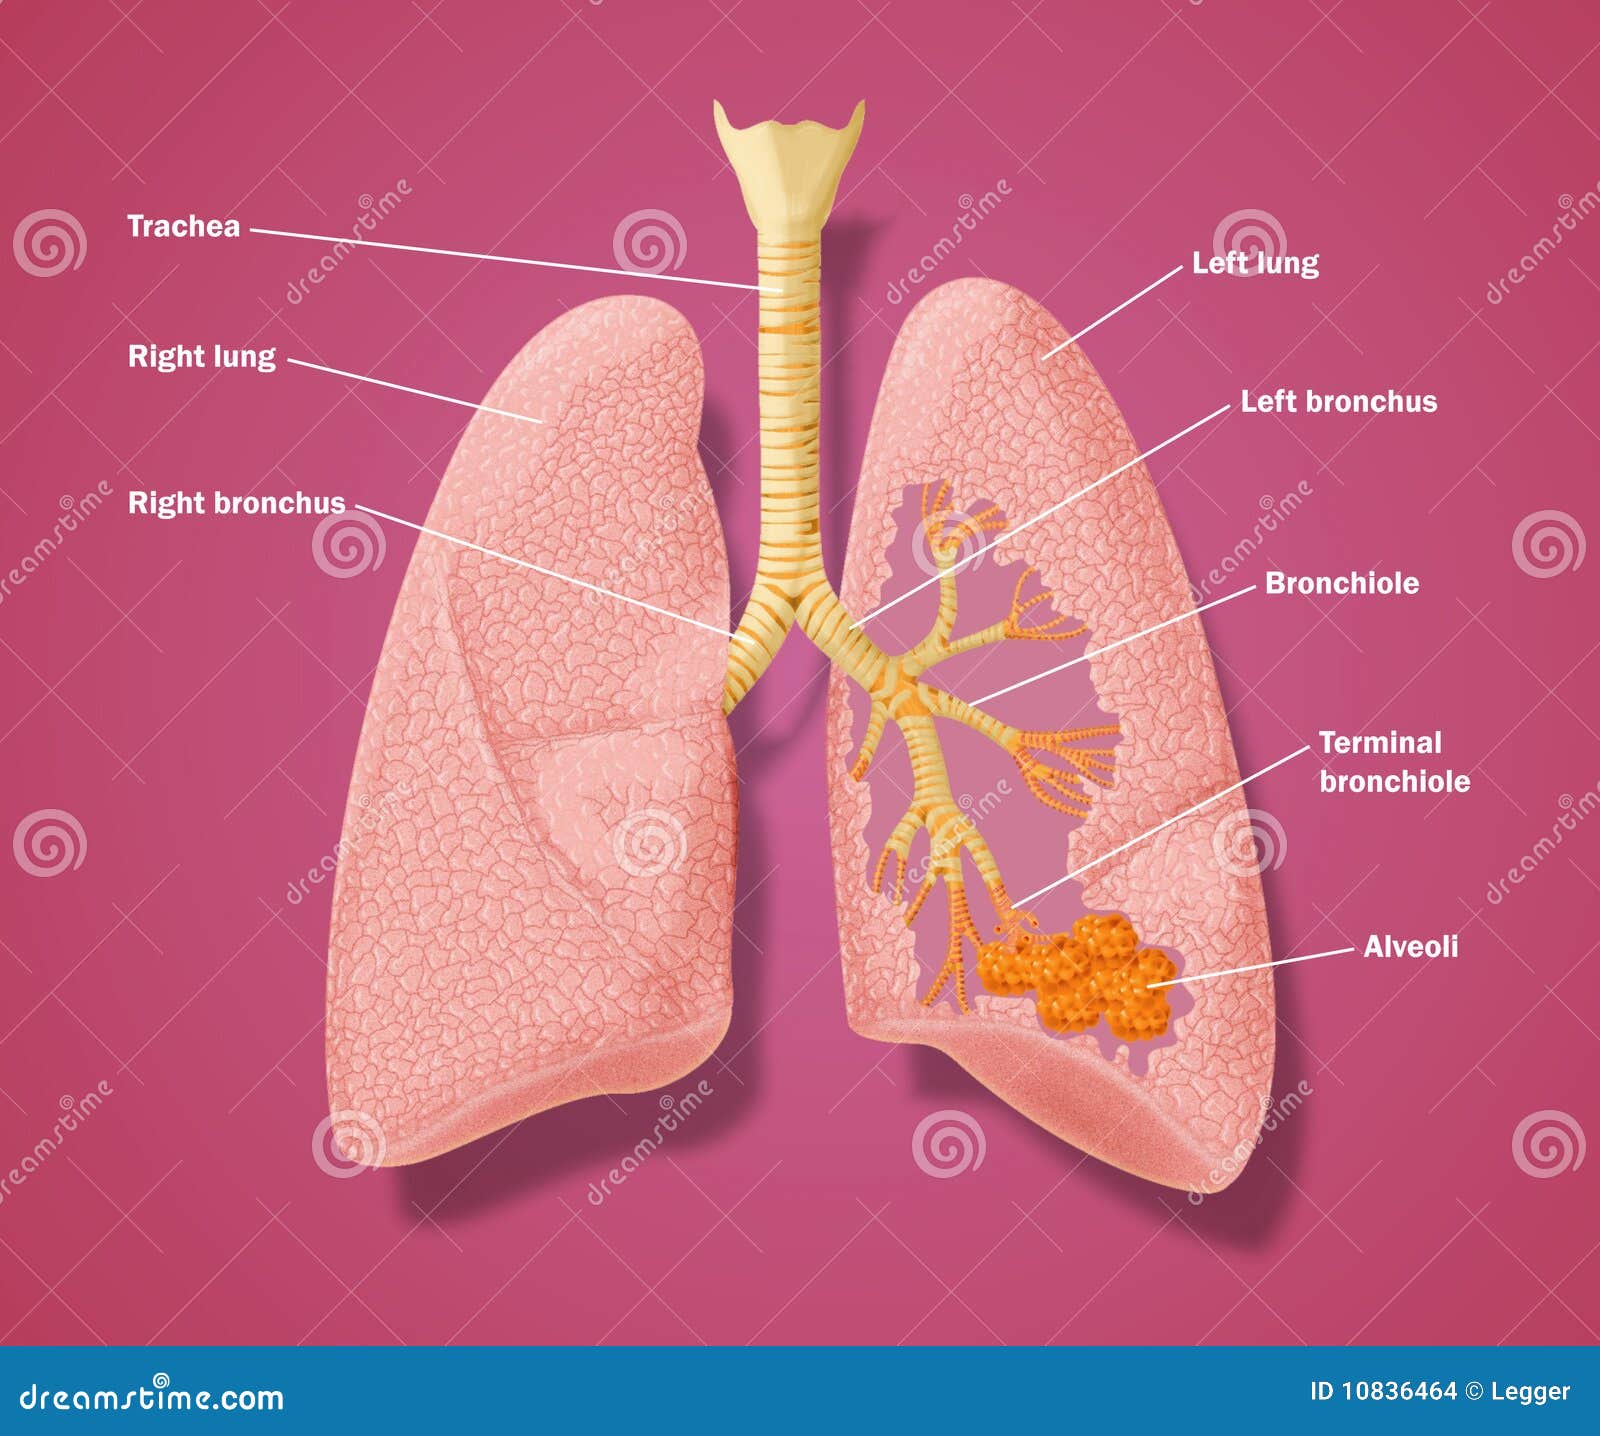 Anatomy Of Respiratory Tract Stock Images - Image: 10836464